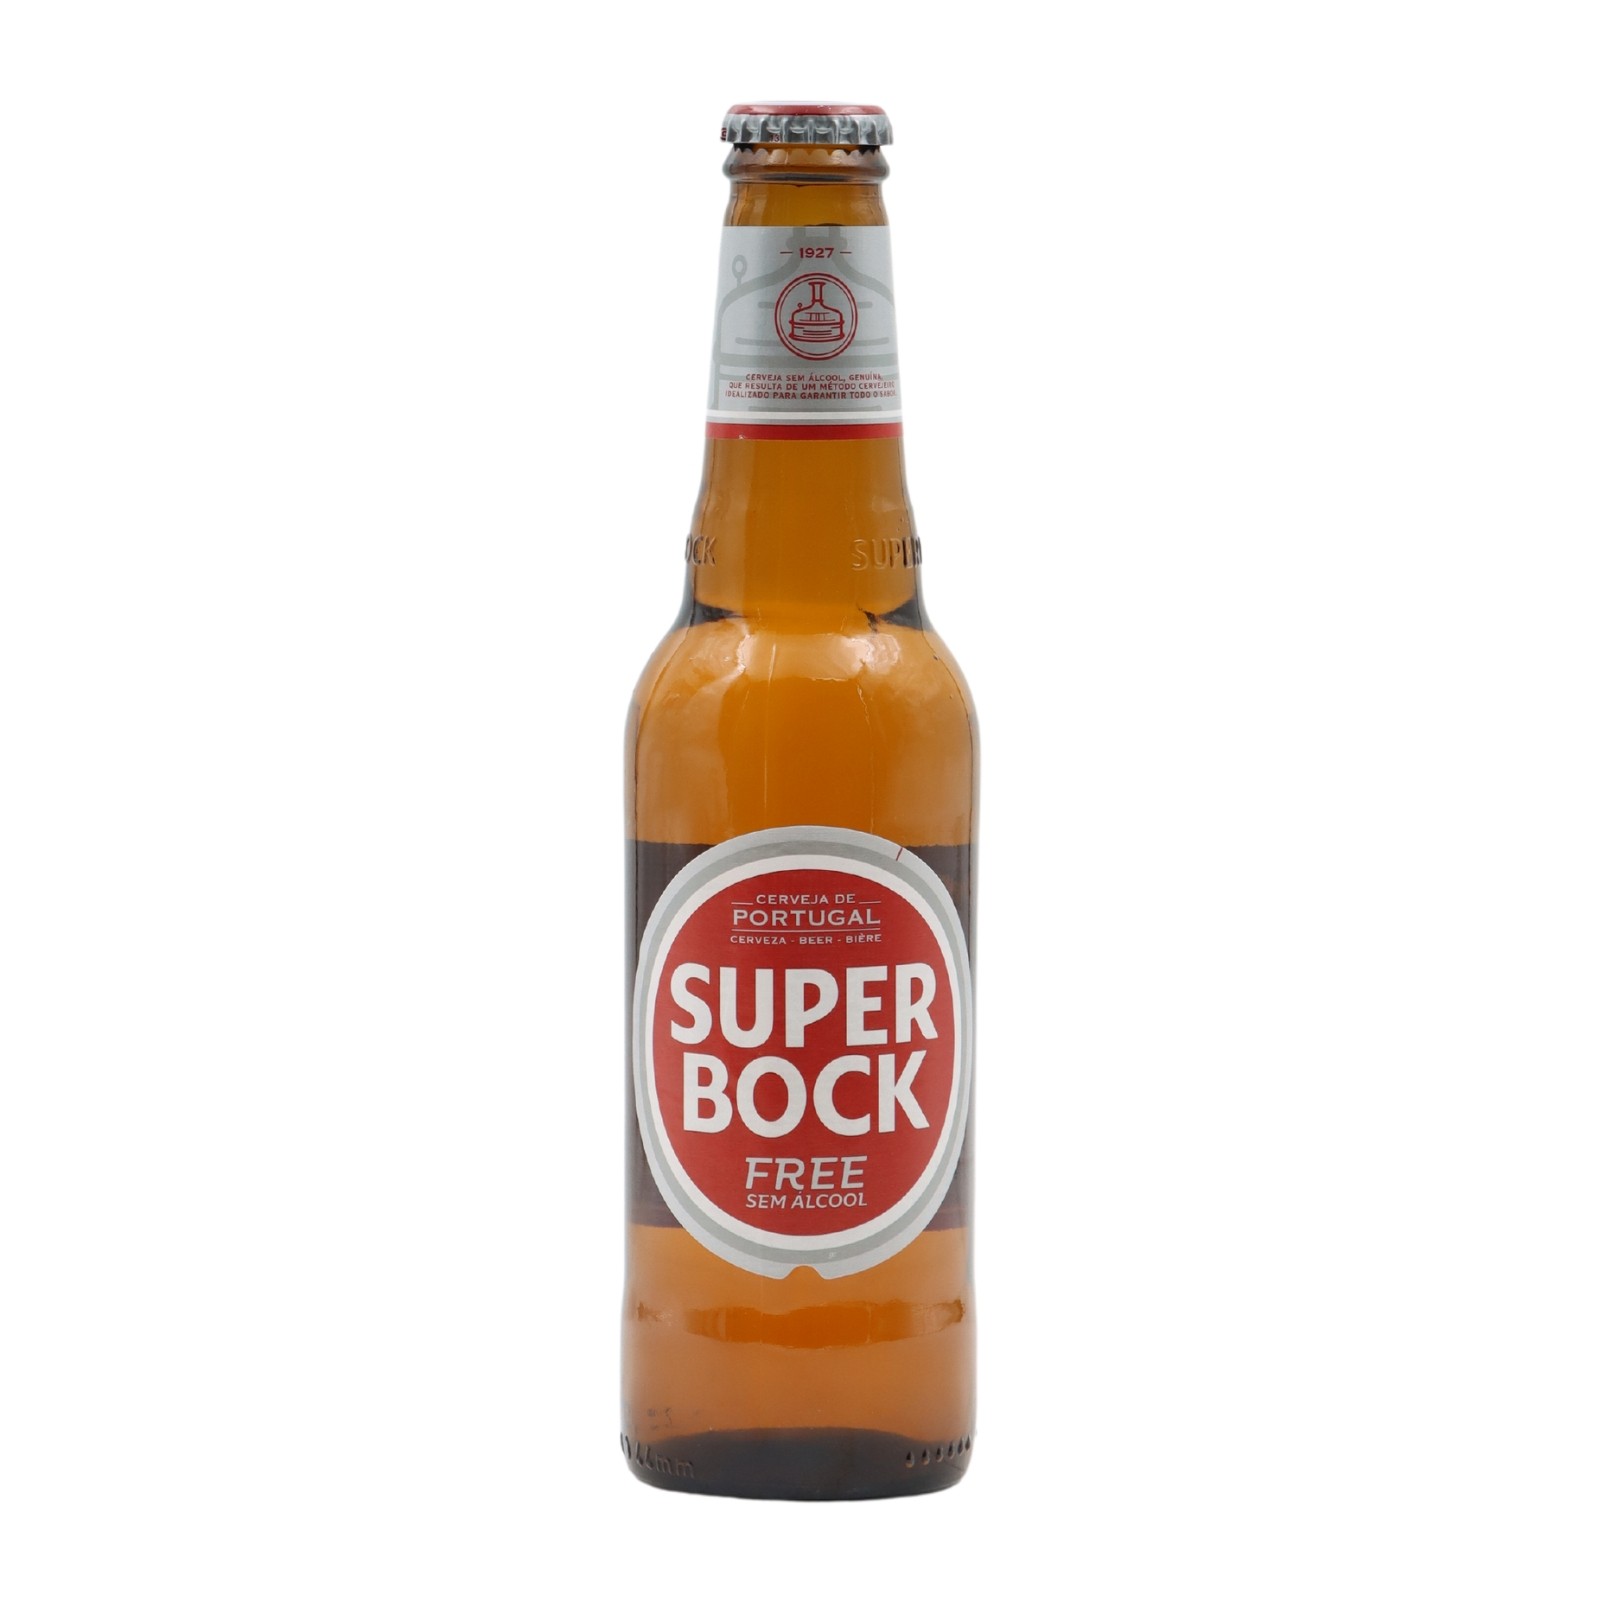 Super Bock 0%